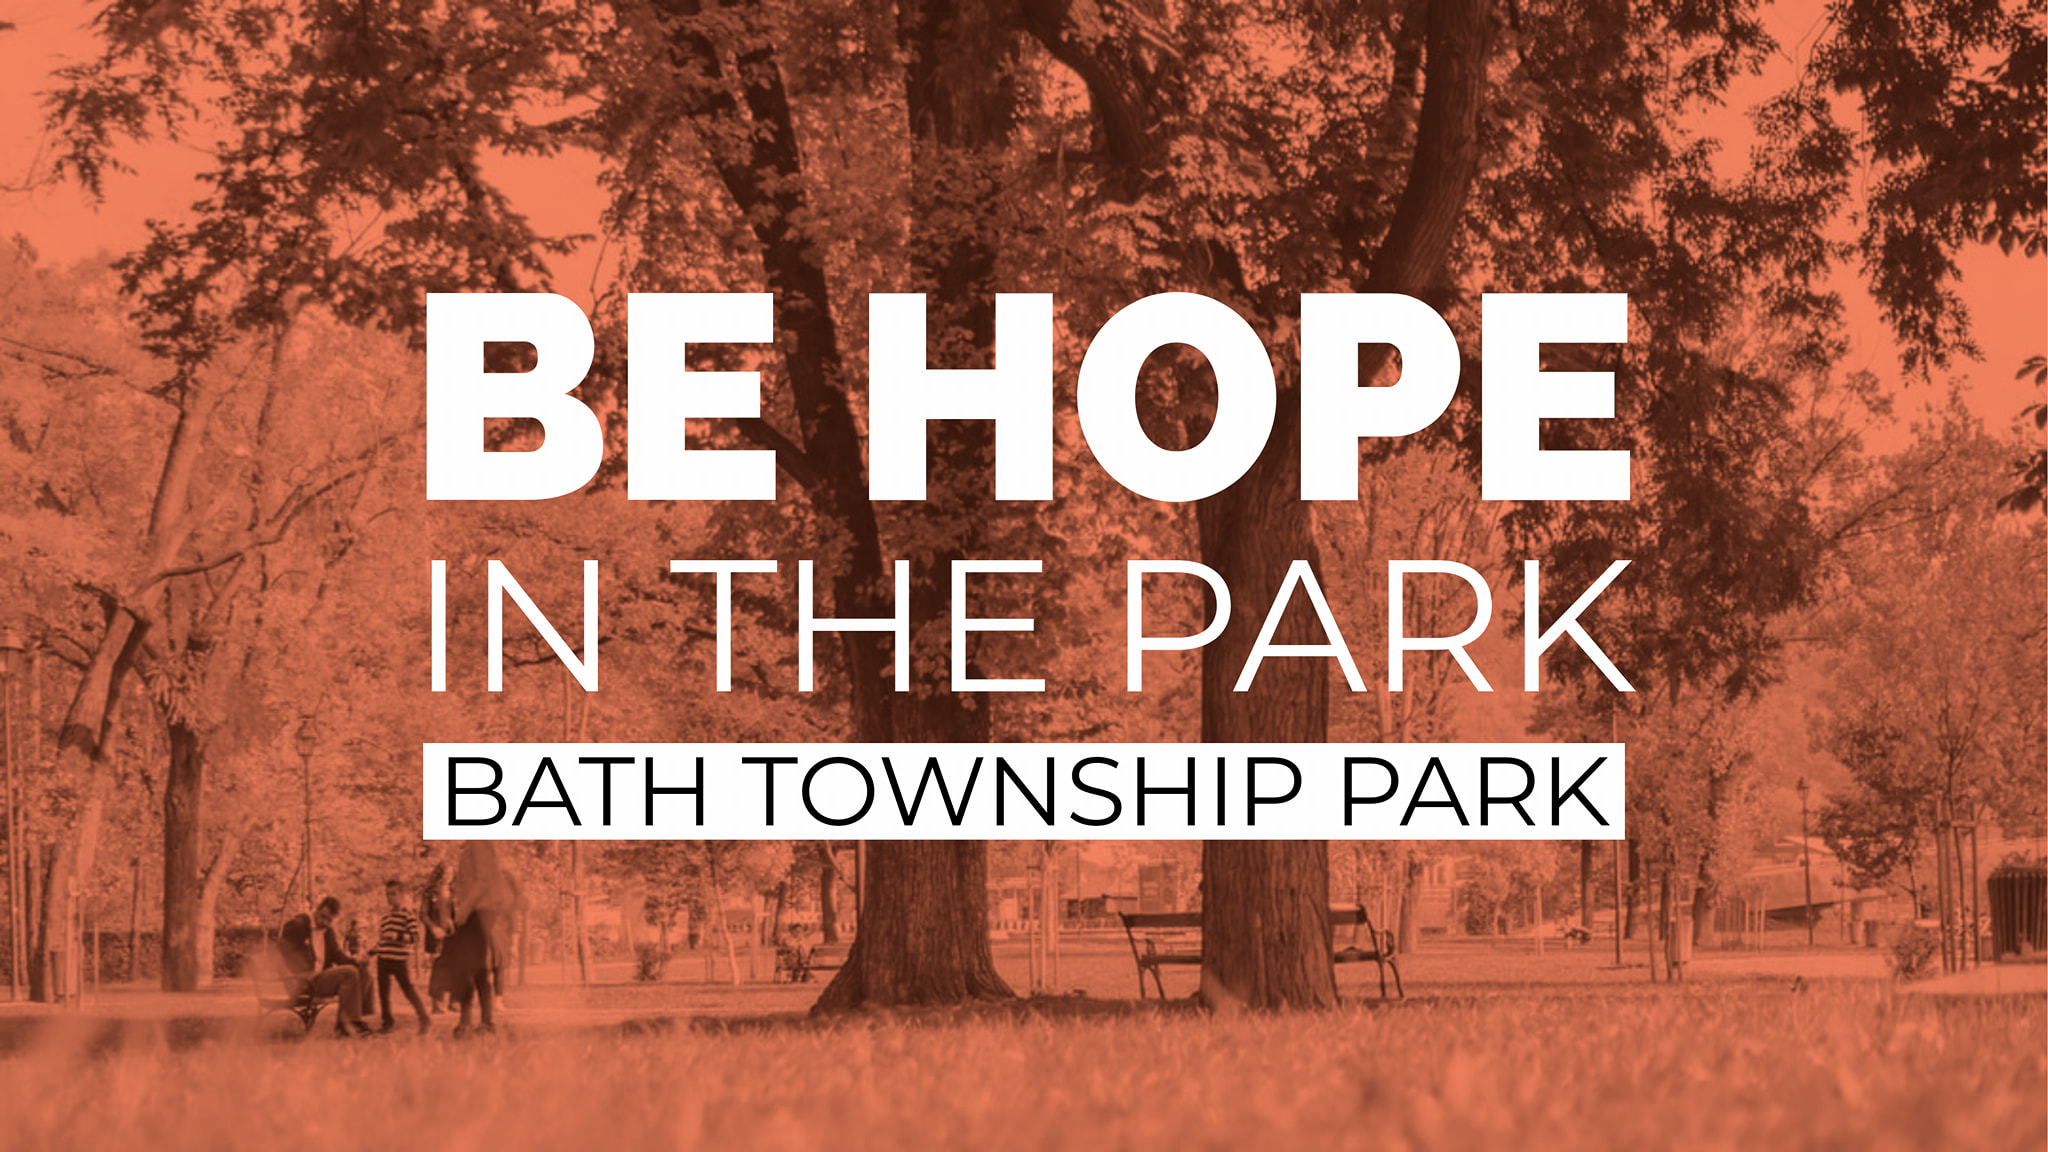 Bath TownShip Park